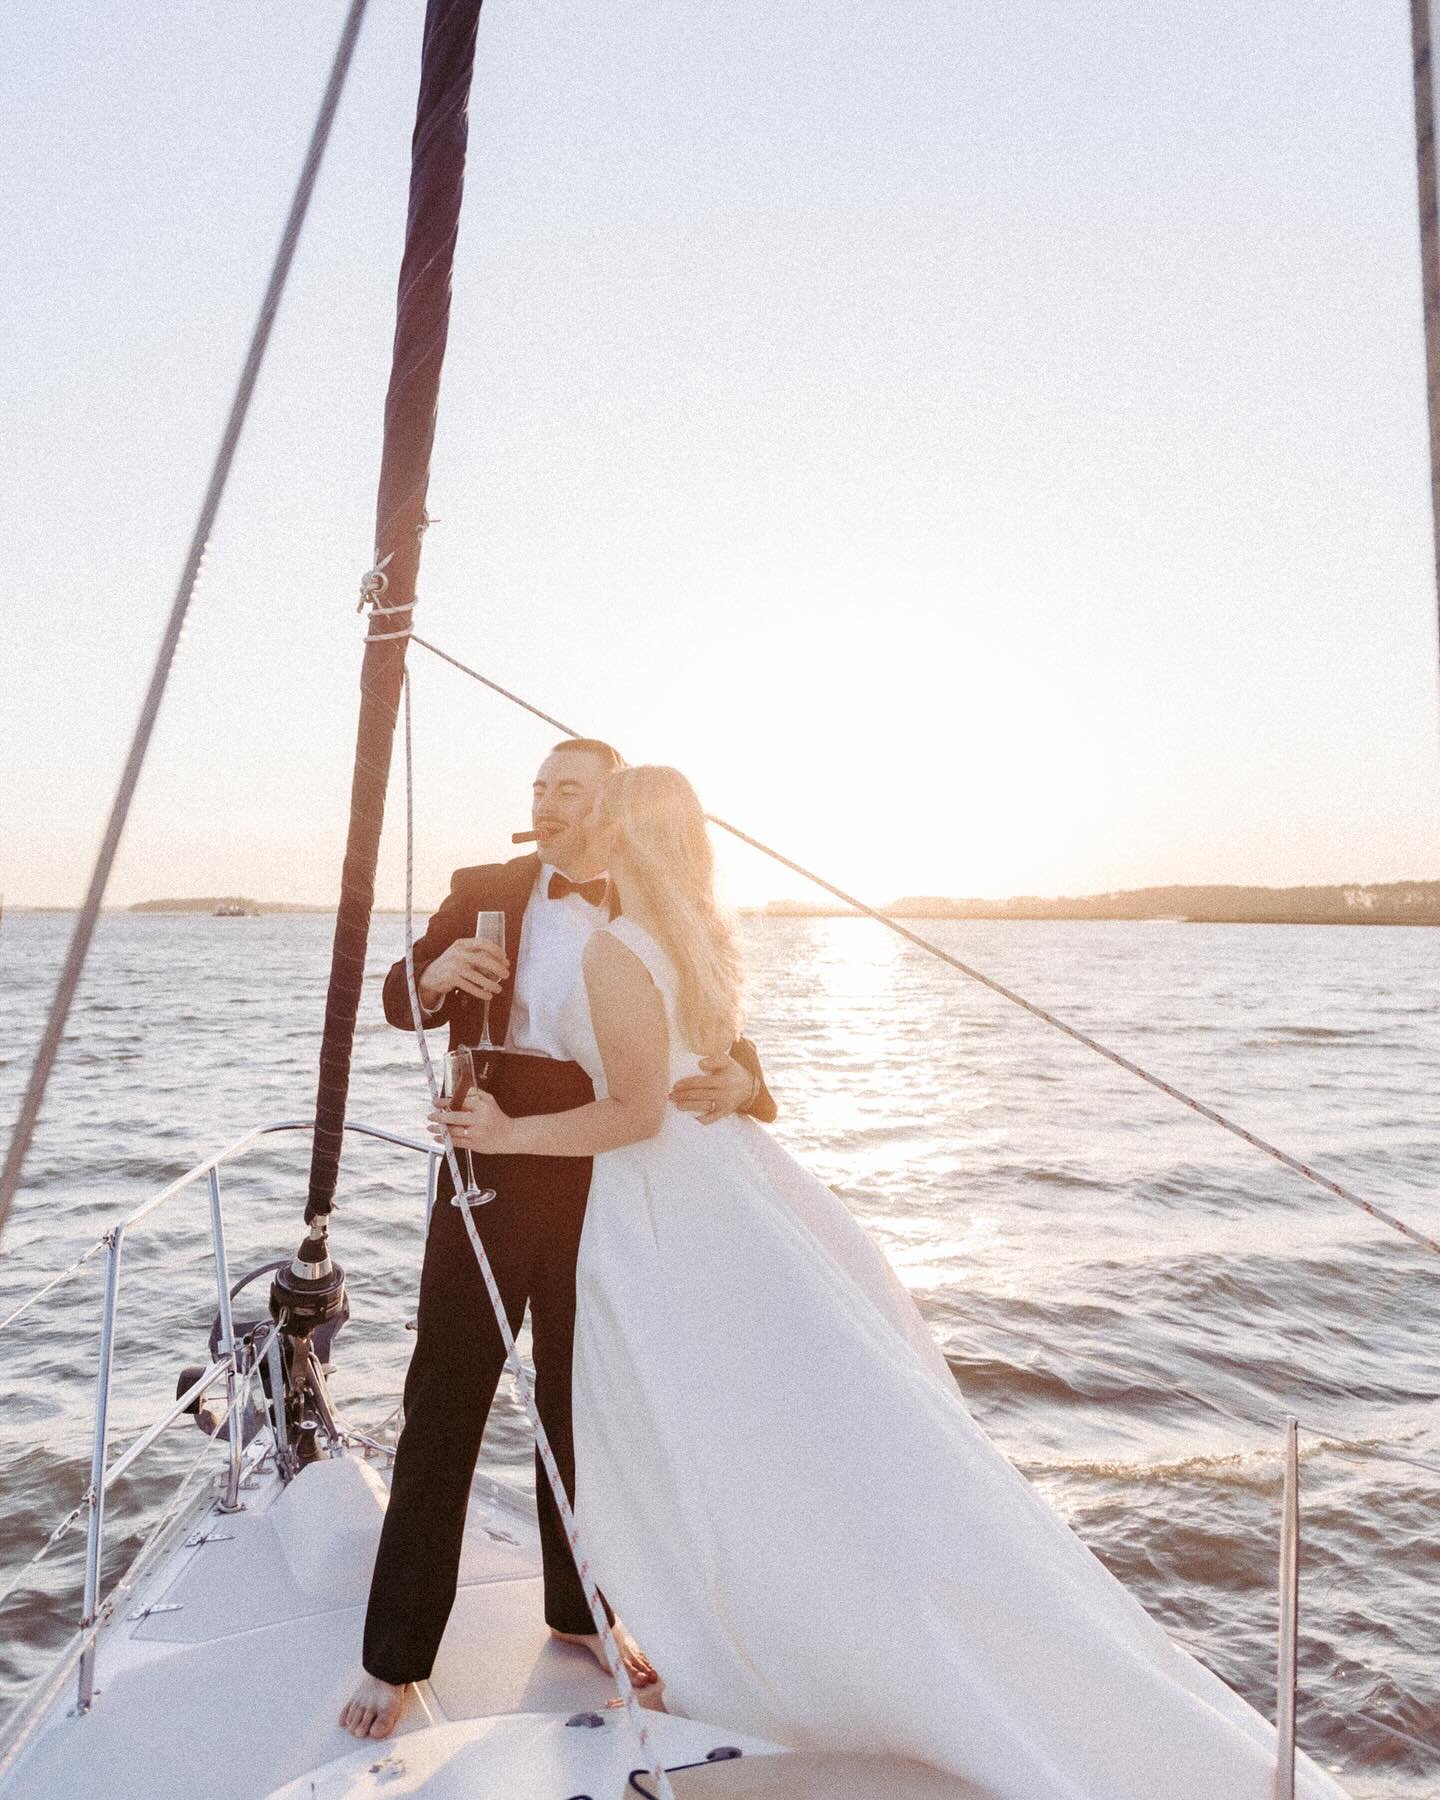 Sailboat + elopement + sunset = MAGIC ✨Would you do your wedding photos on a sailboat?!